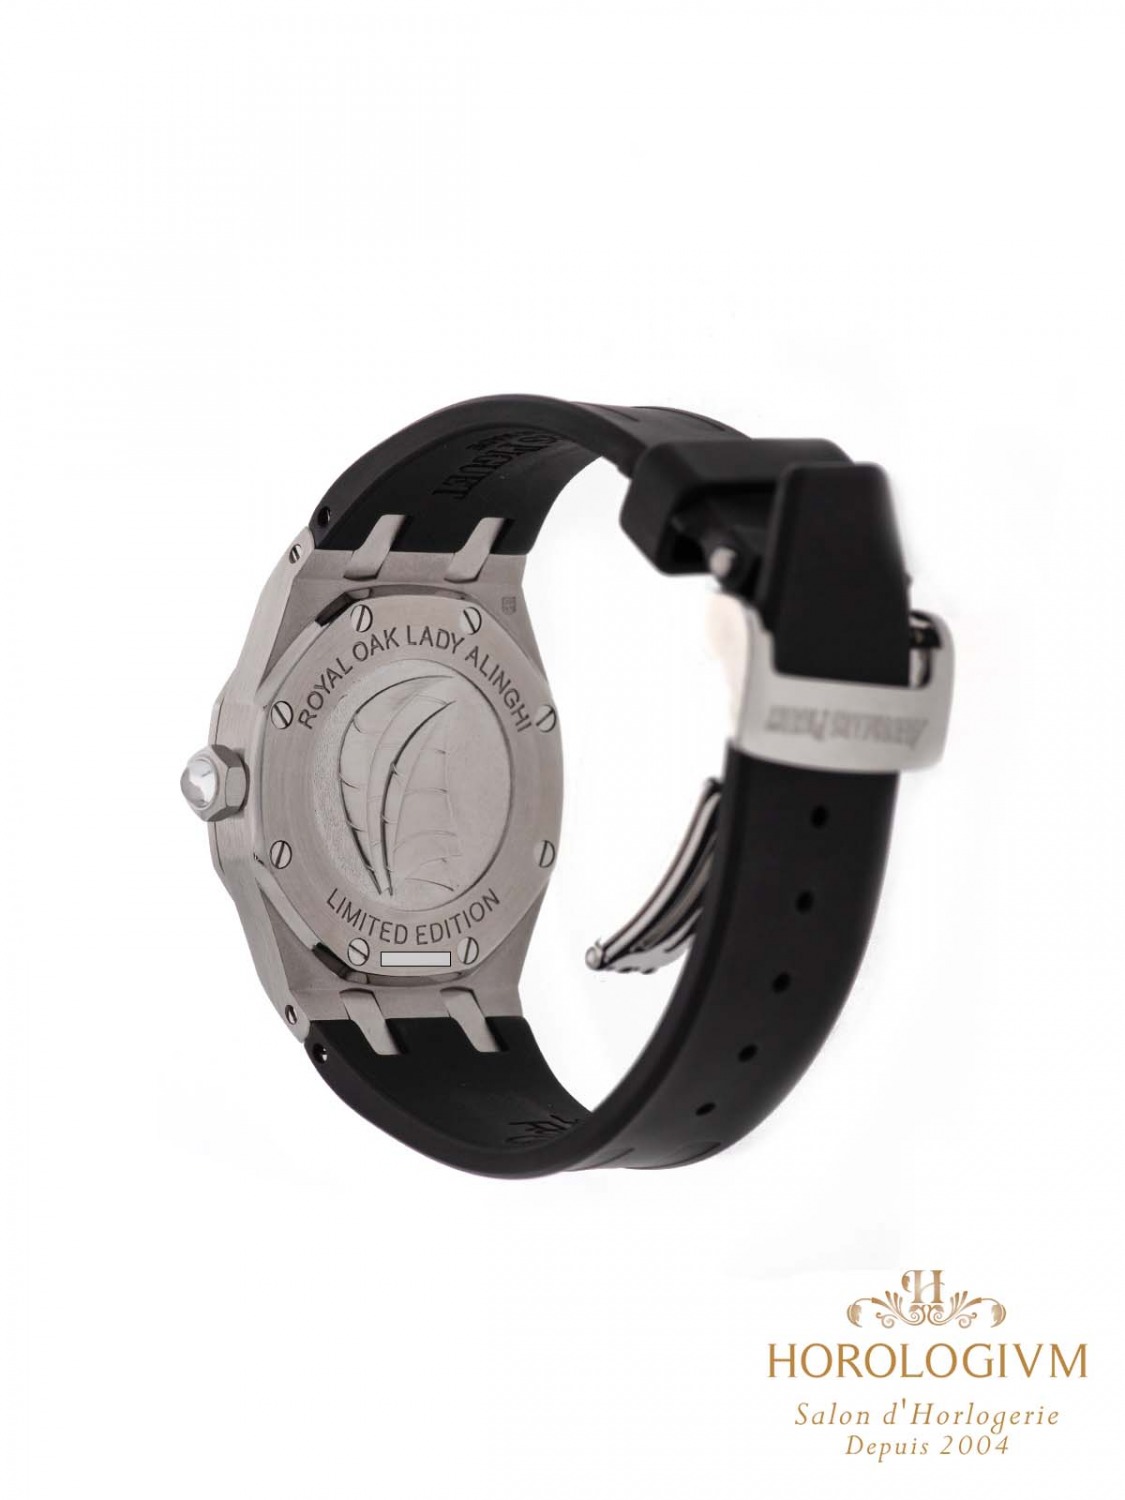 Audemars Piguet Royal Oak Lady Alinghi 33MM Ref. 67611ST.ZZ.D012CR.01 watch, silver